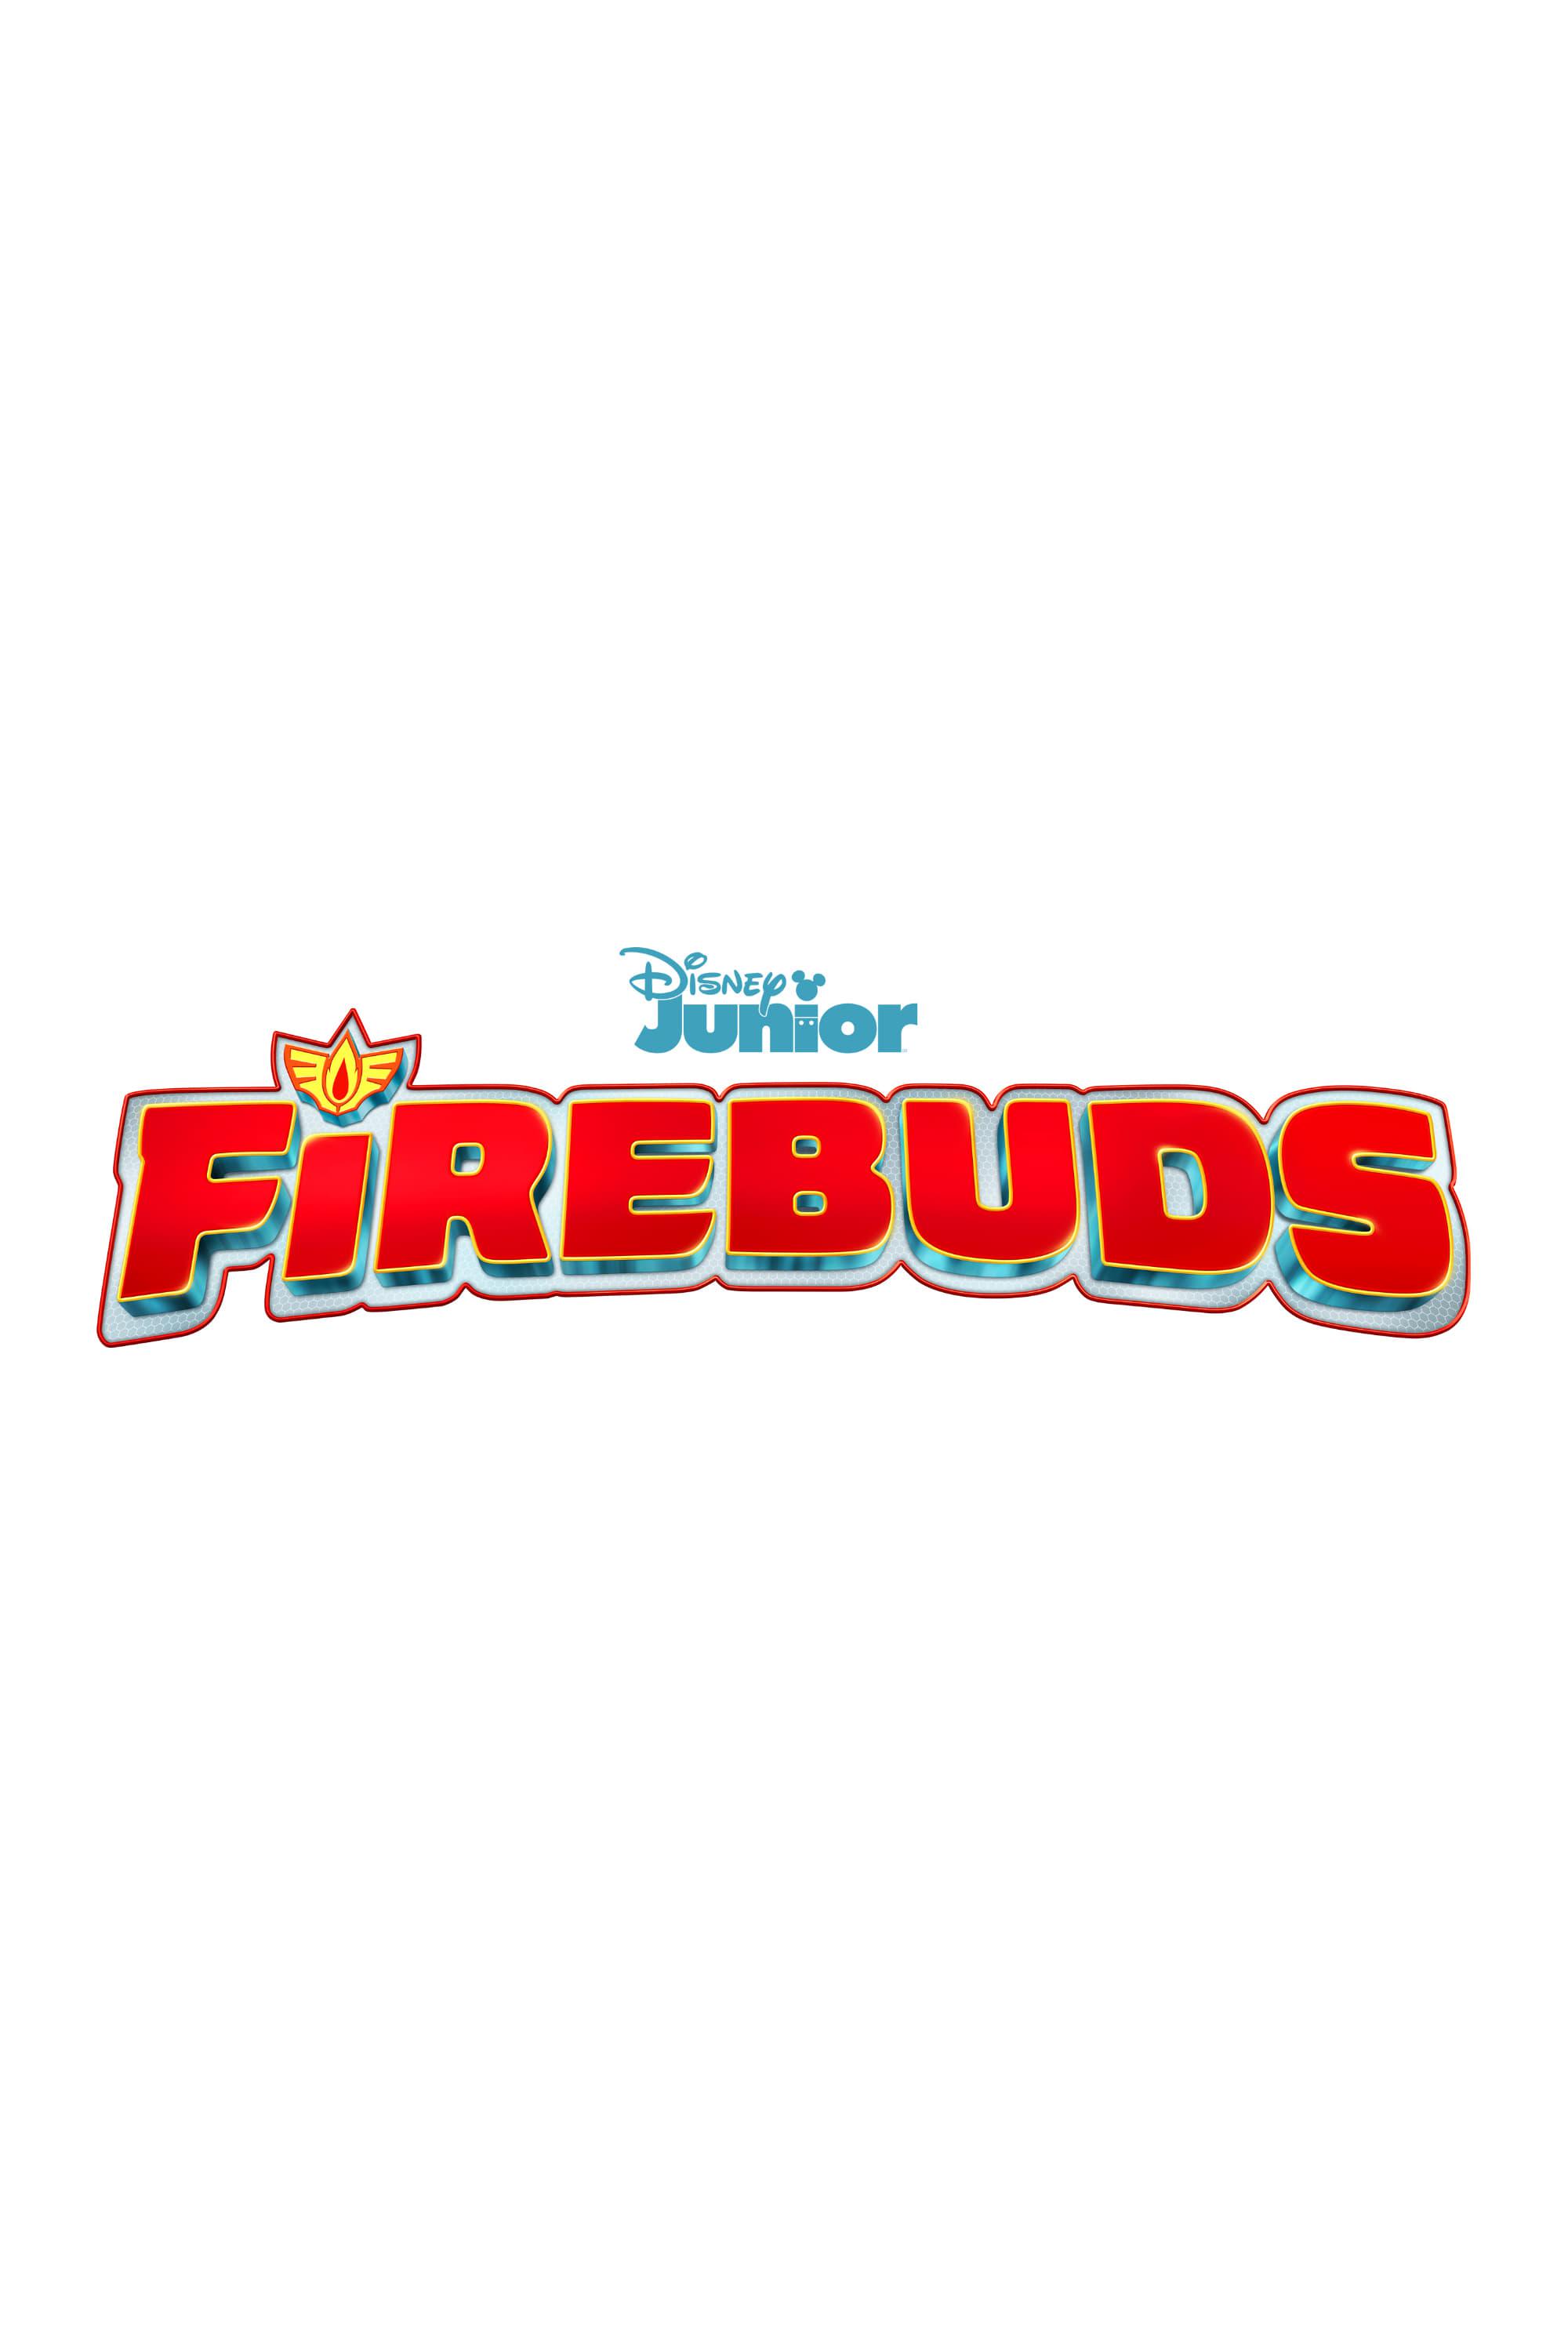 TV ratings for Firebuds in Portugal. Disney Junior TV series